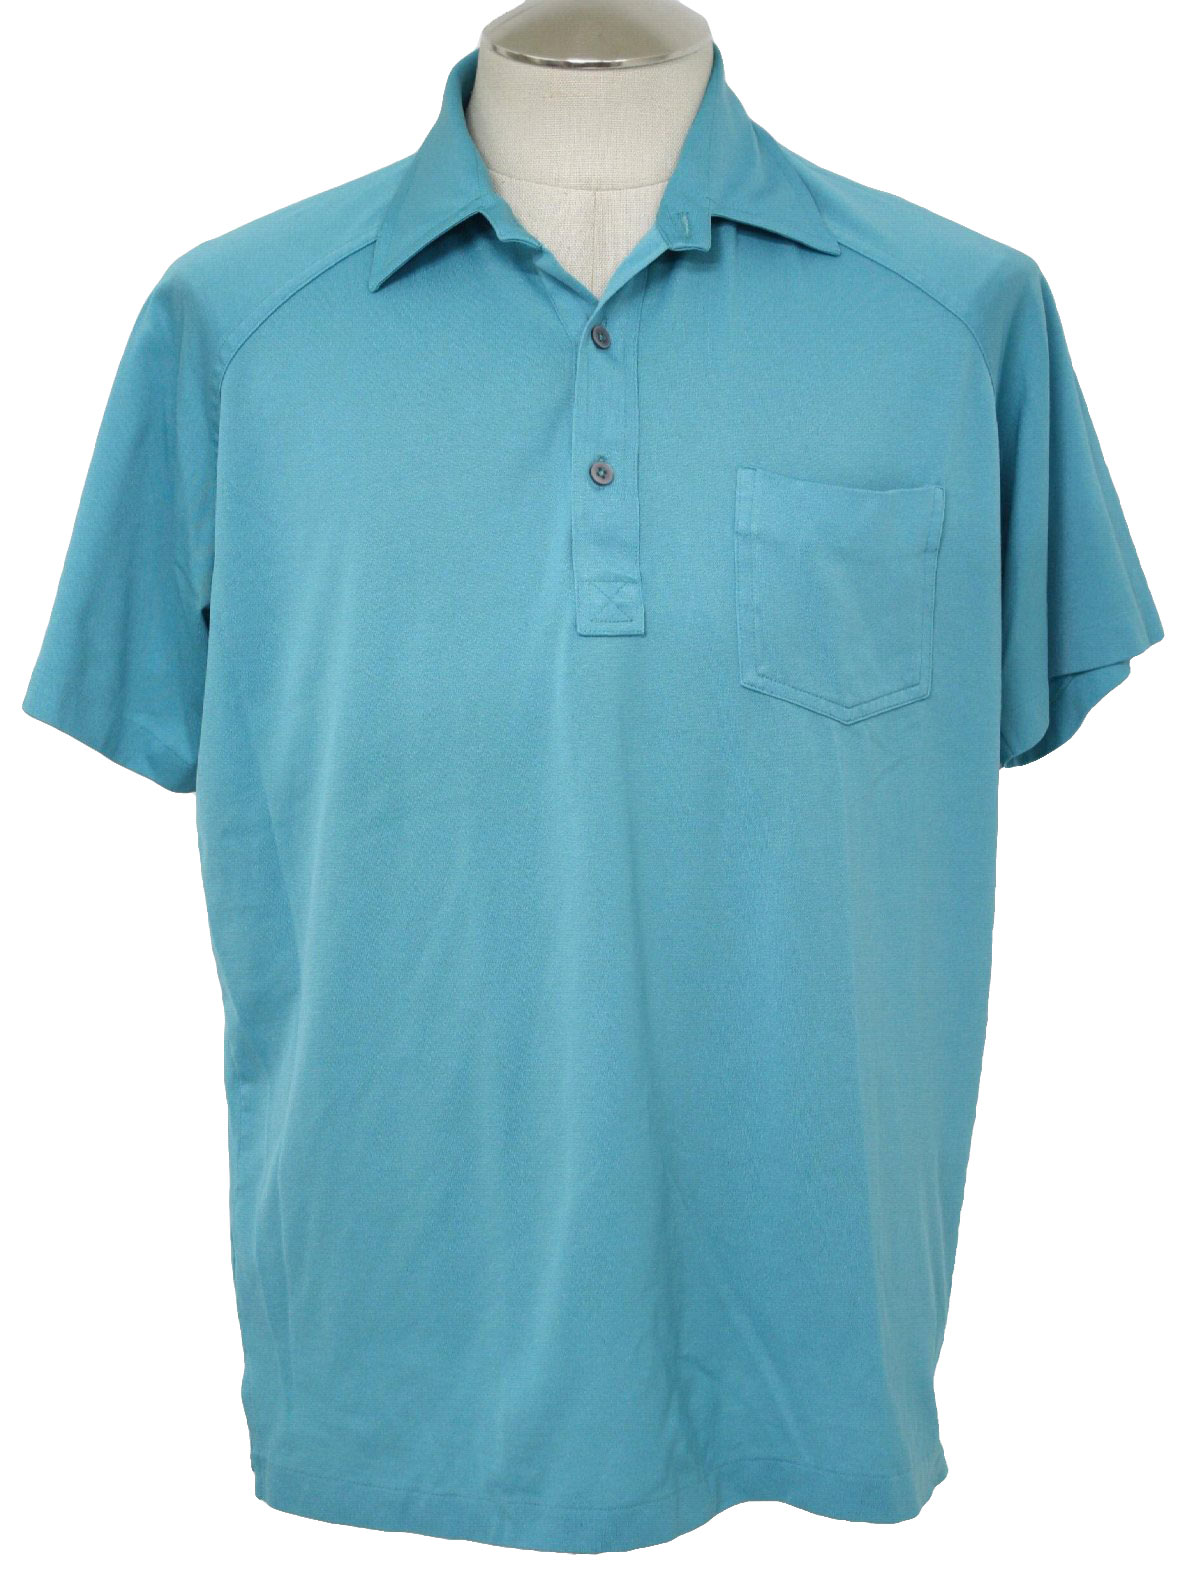 Vintage Robert Bruce 1980s Shirt: 80s -Robert Bruce- Mens turquoise ...